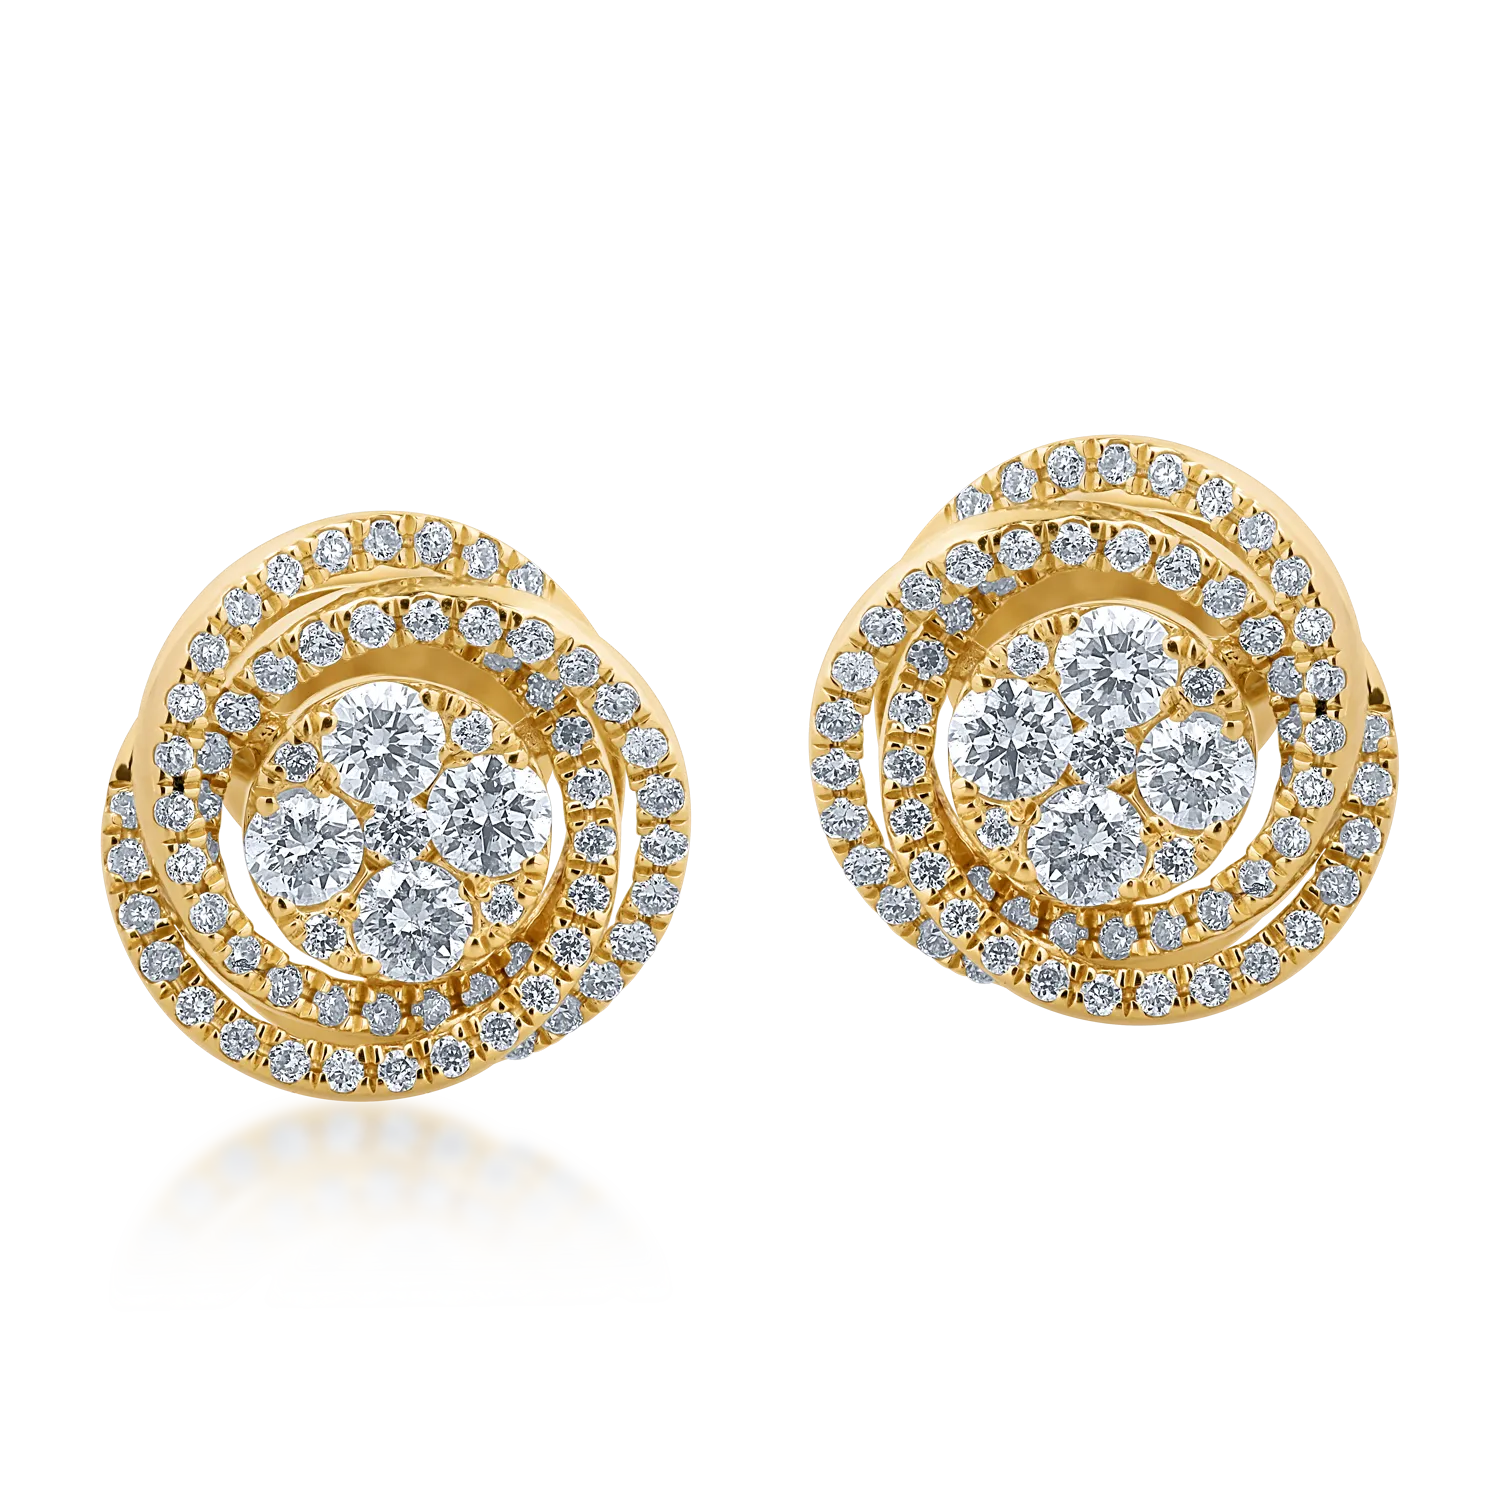 18K yellow gold earrings with 0.56ct diamonds